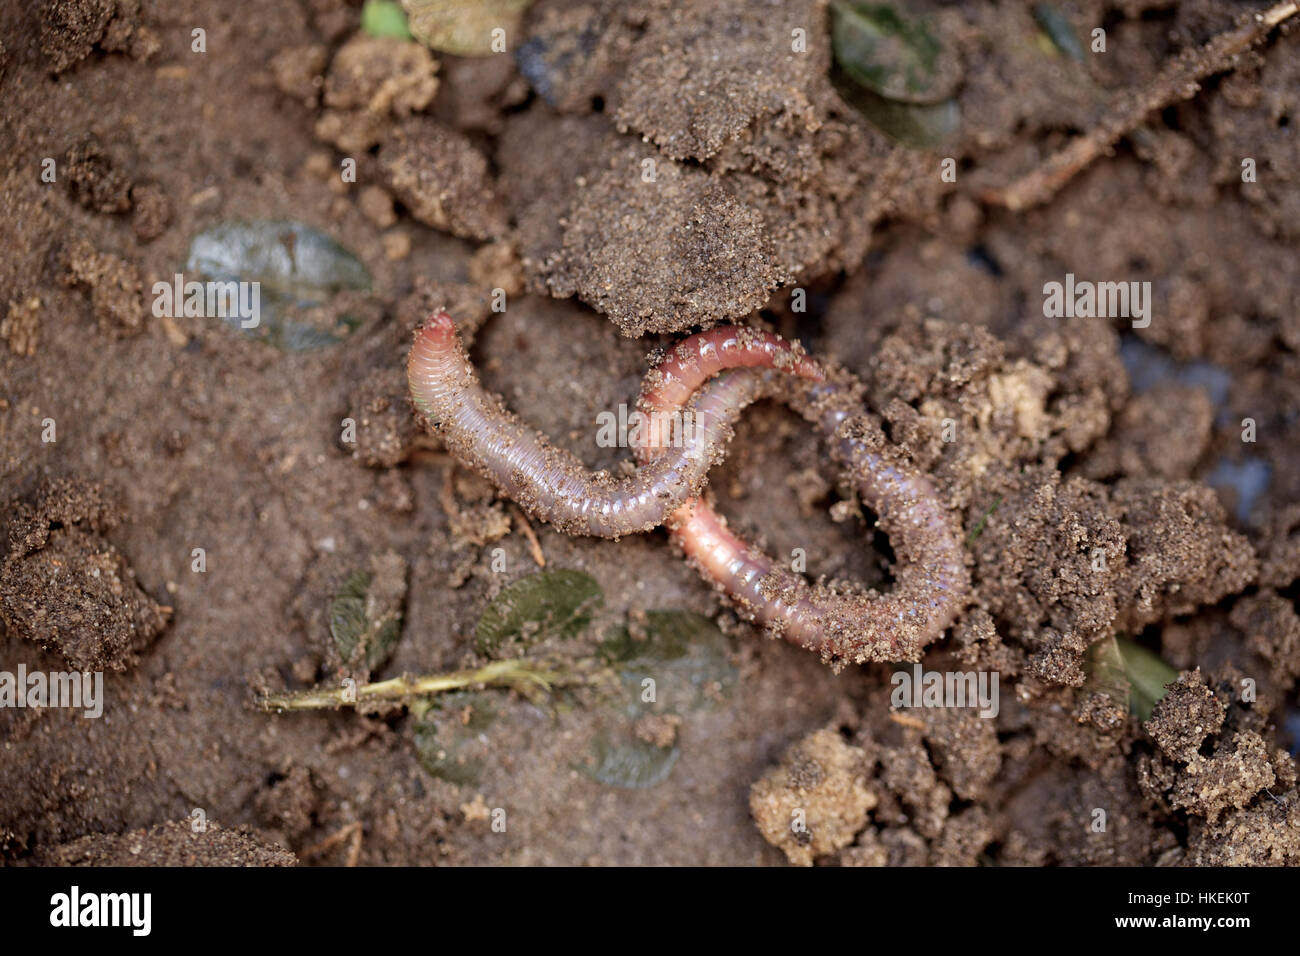 earthworm on soil. animal, worm, mud, garden. Stock Photo